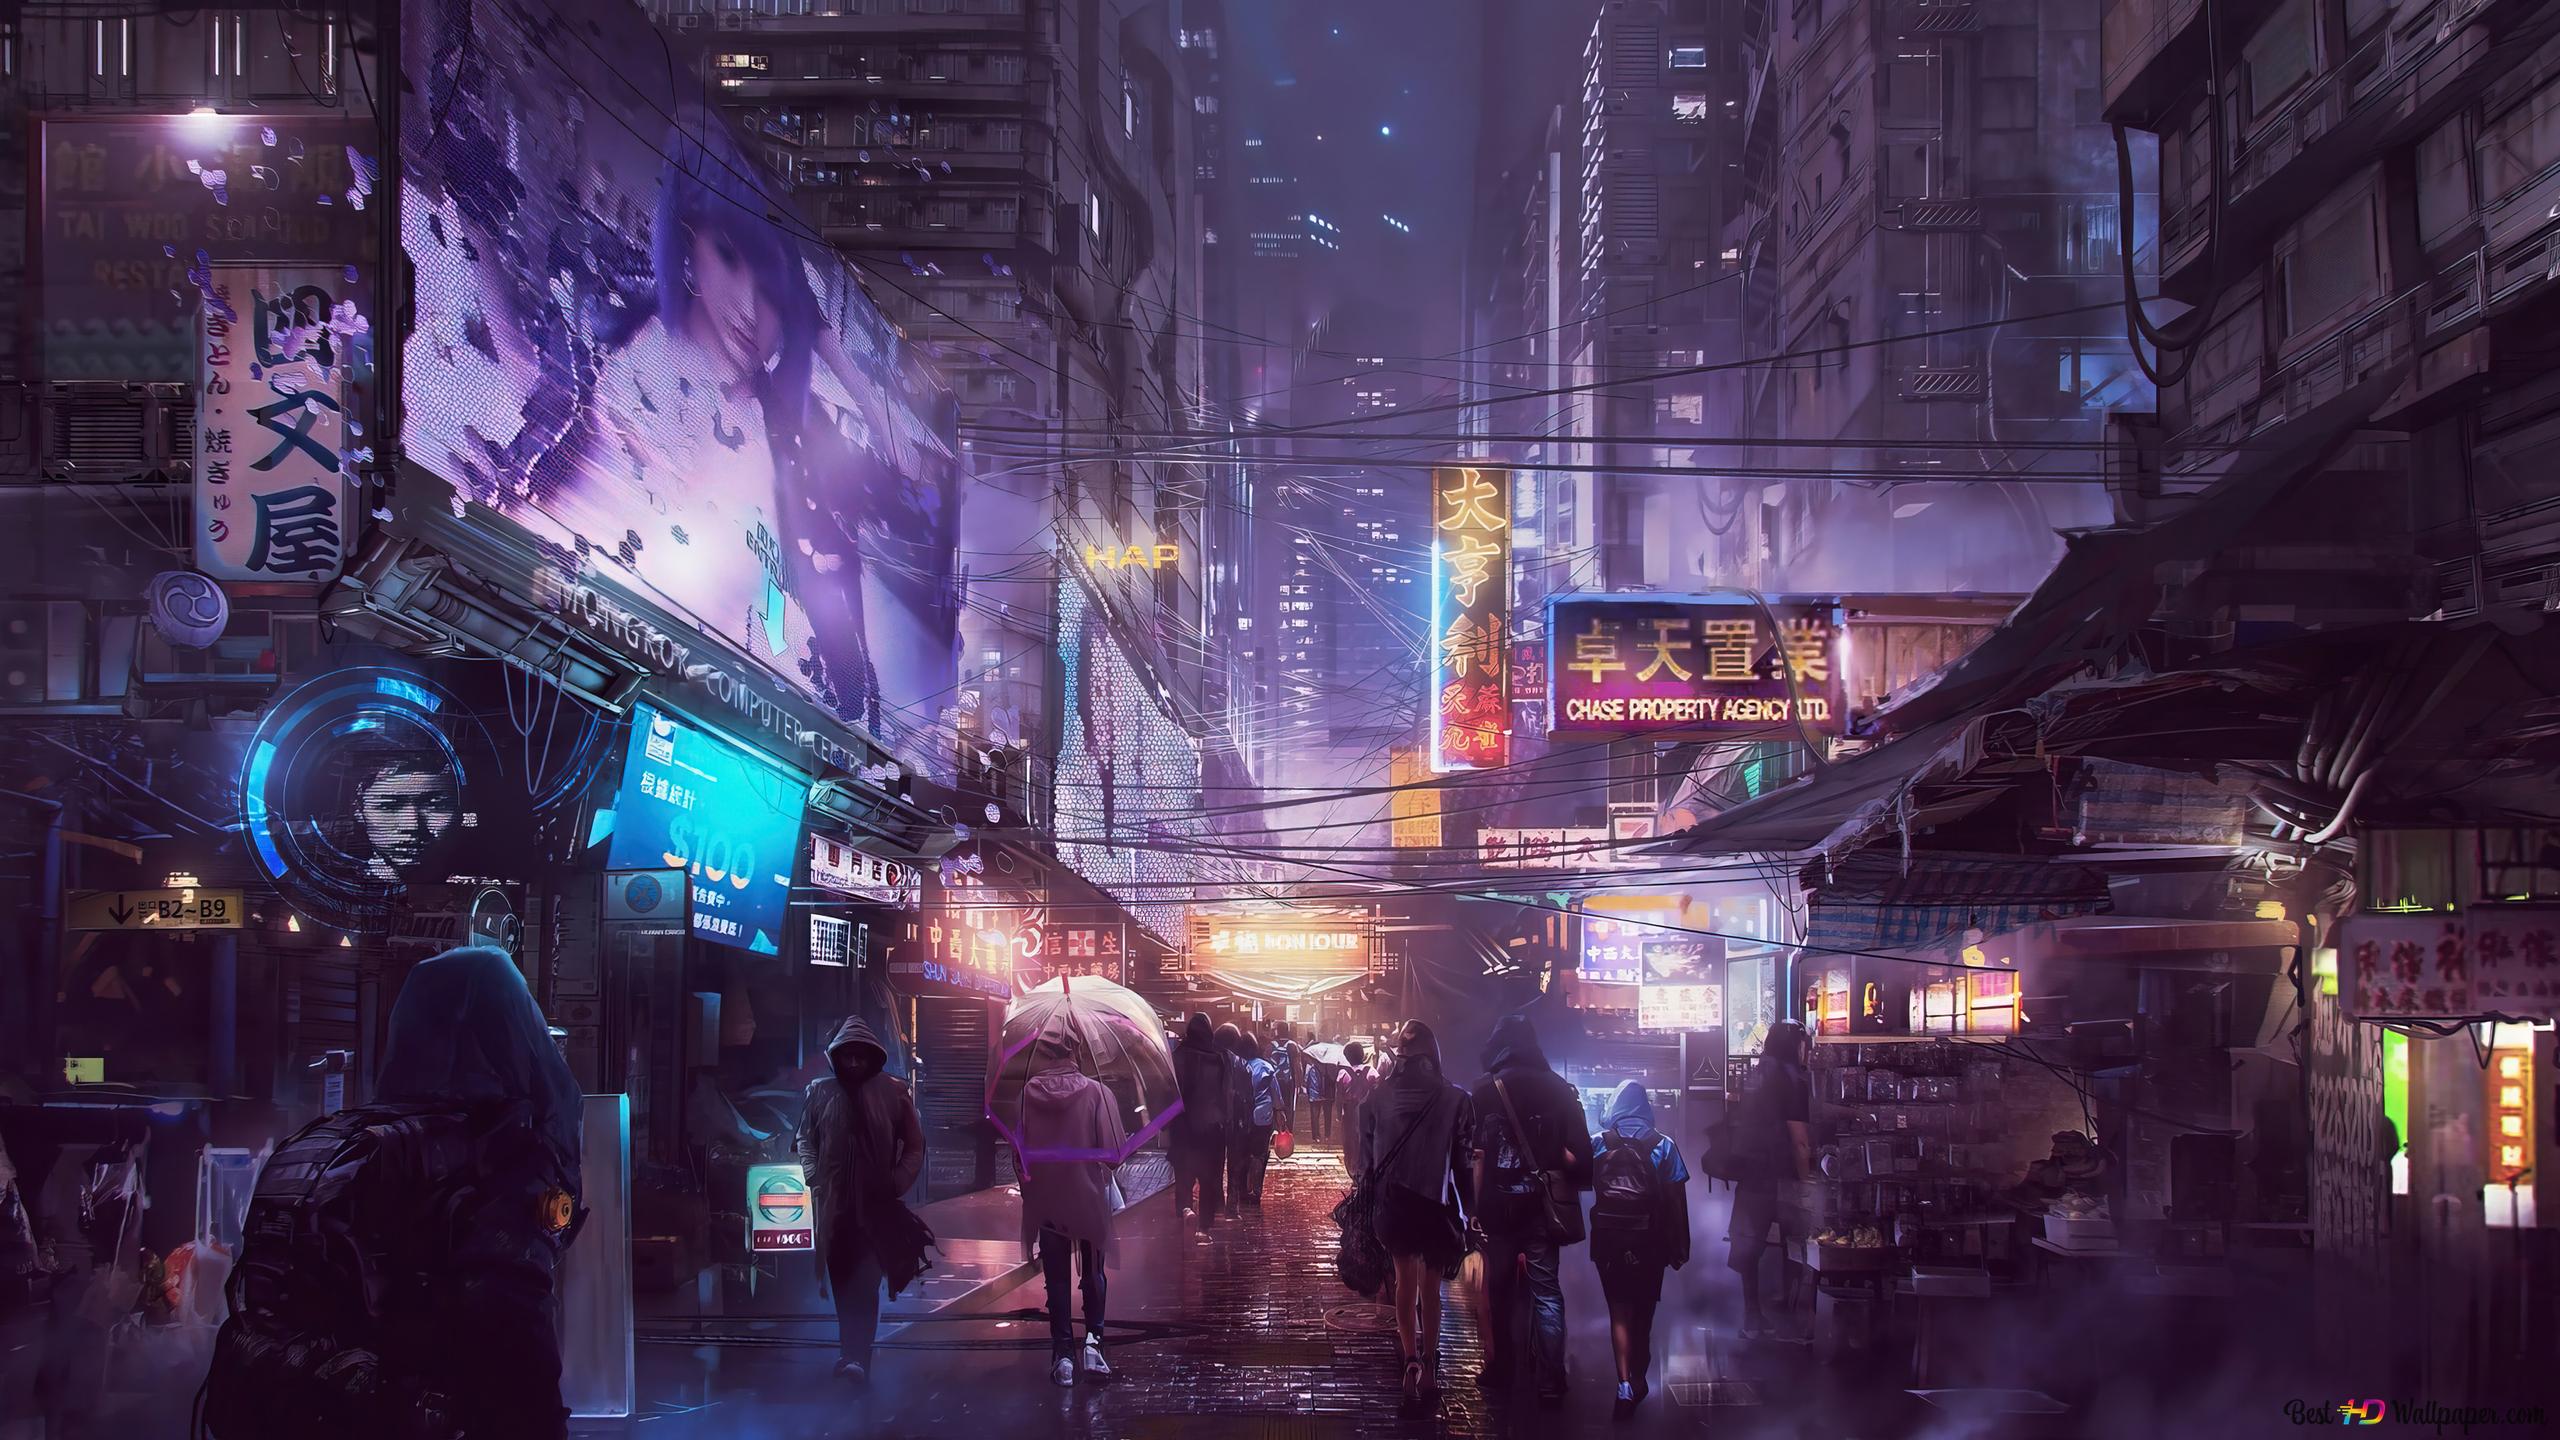 Cyberpunk Scifi night city art 4K wallpaper download